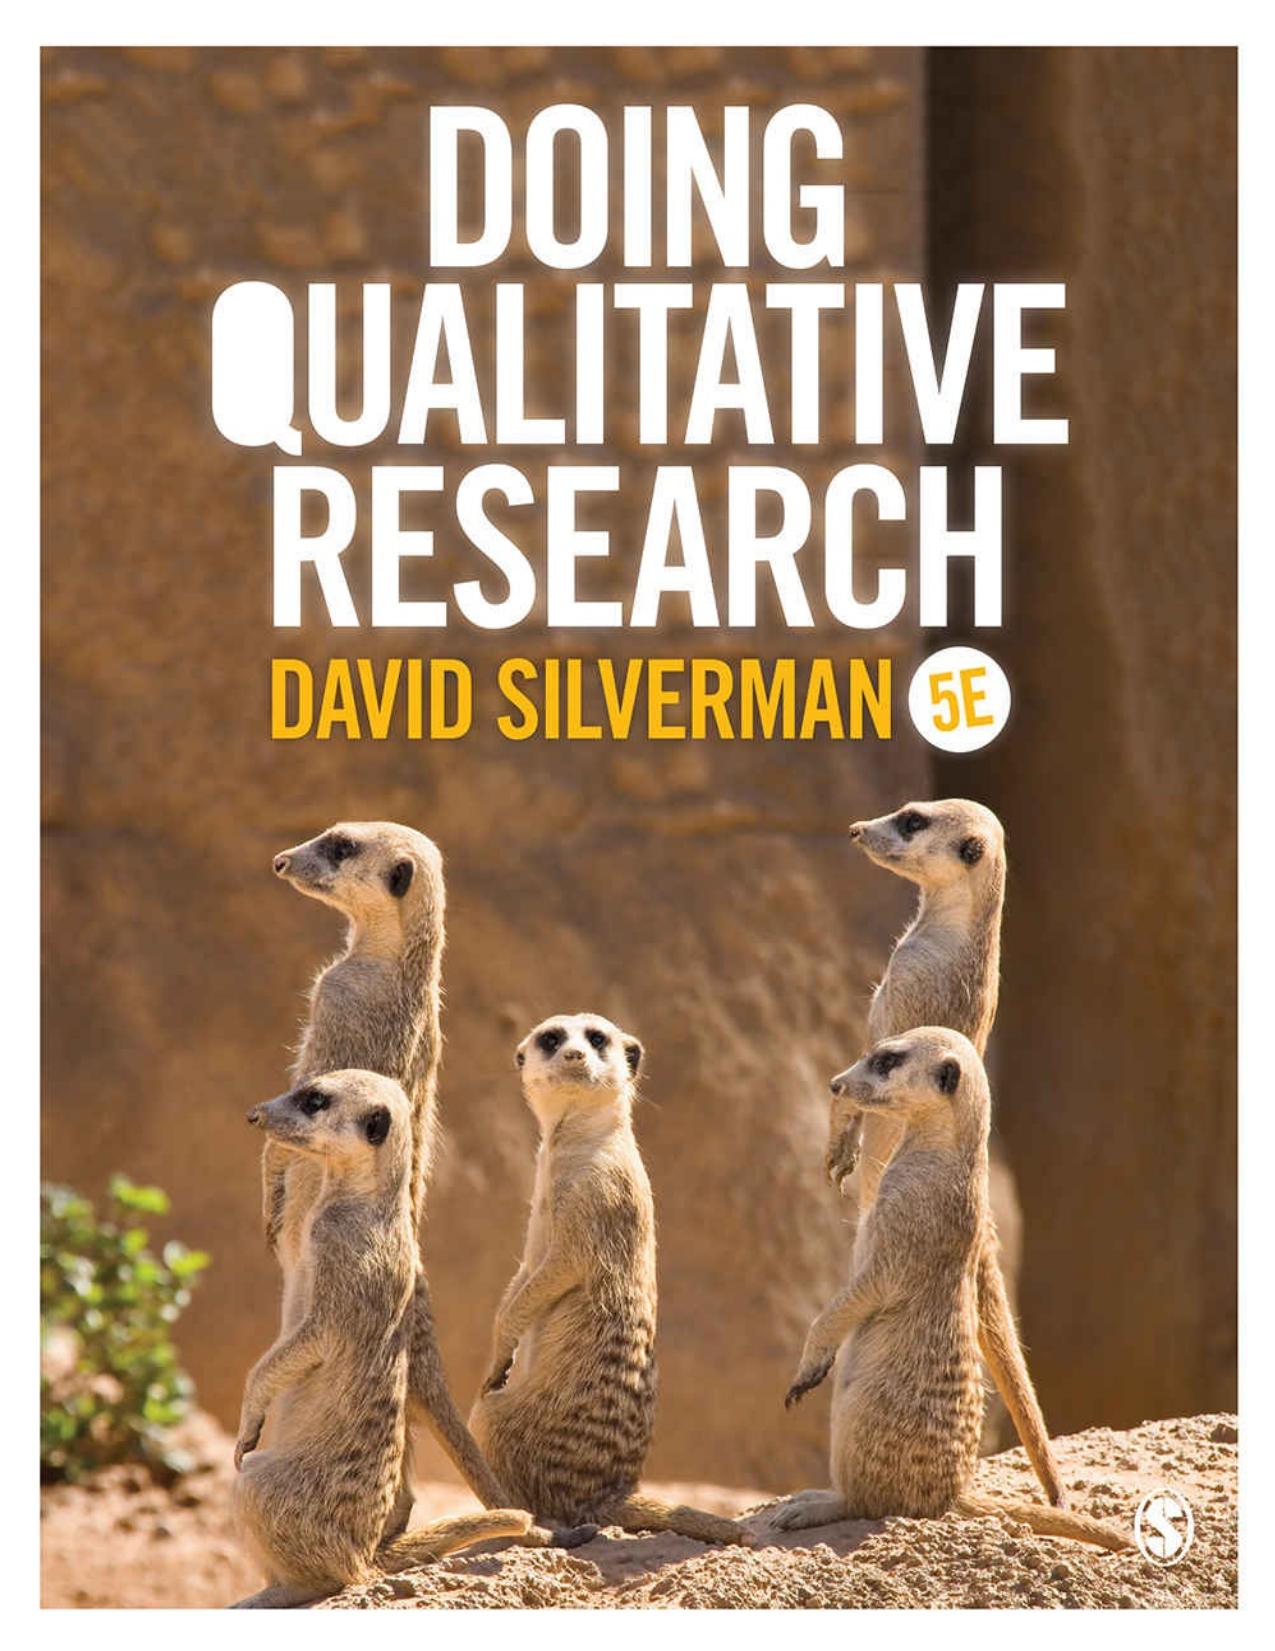 Doing Qualitative Research 5th David Silverman.jpg